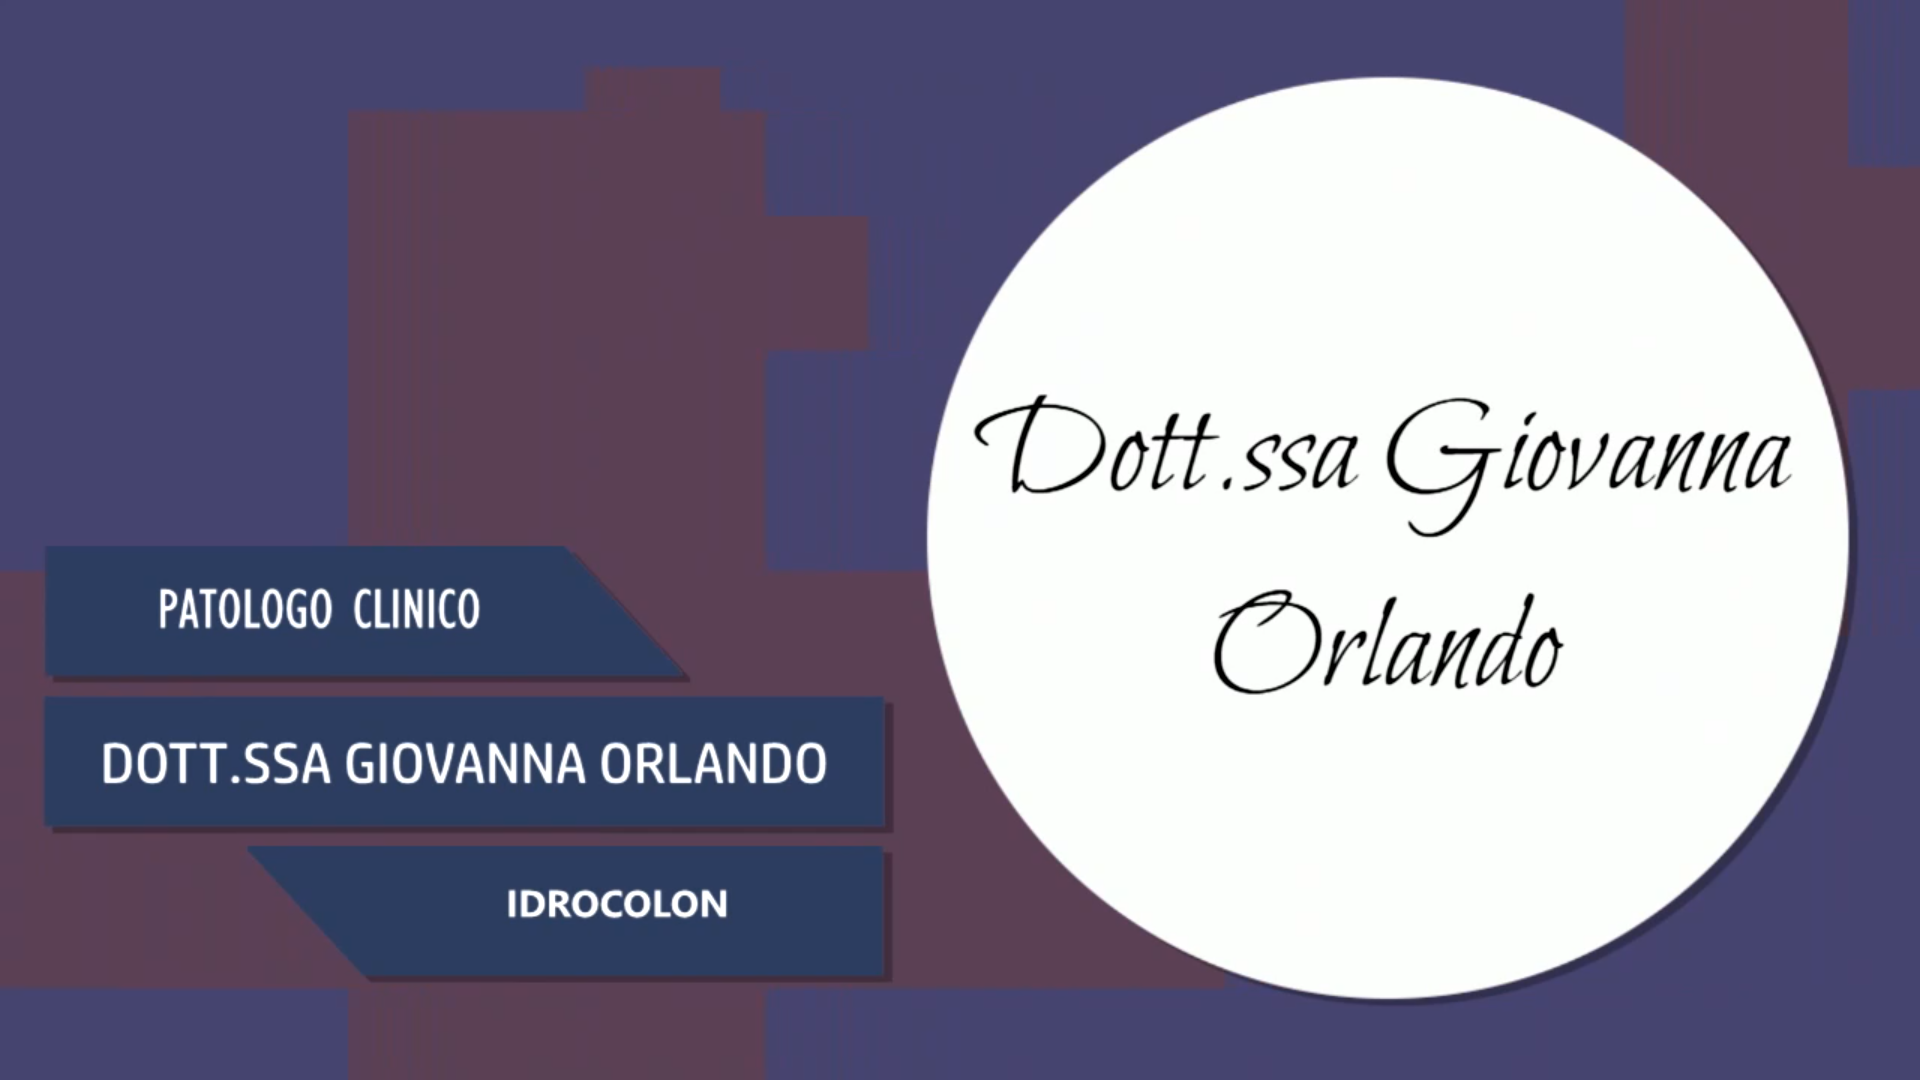 Intervista alla Dott.ssa Giovanna Orlando – Idrocolon